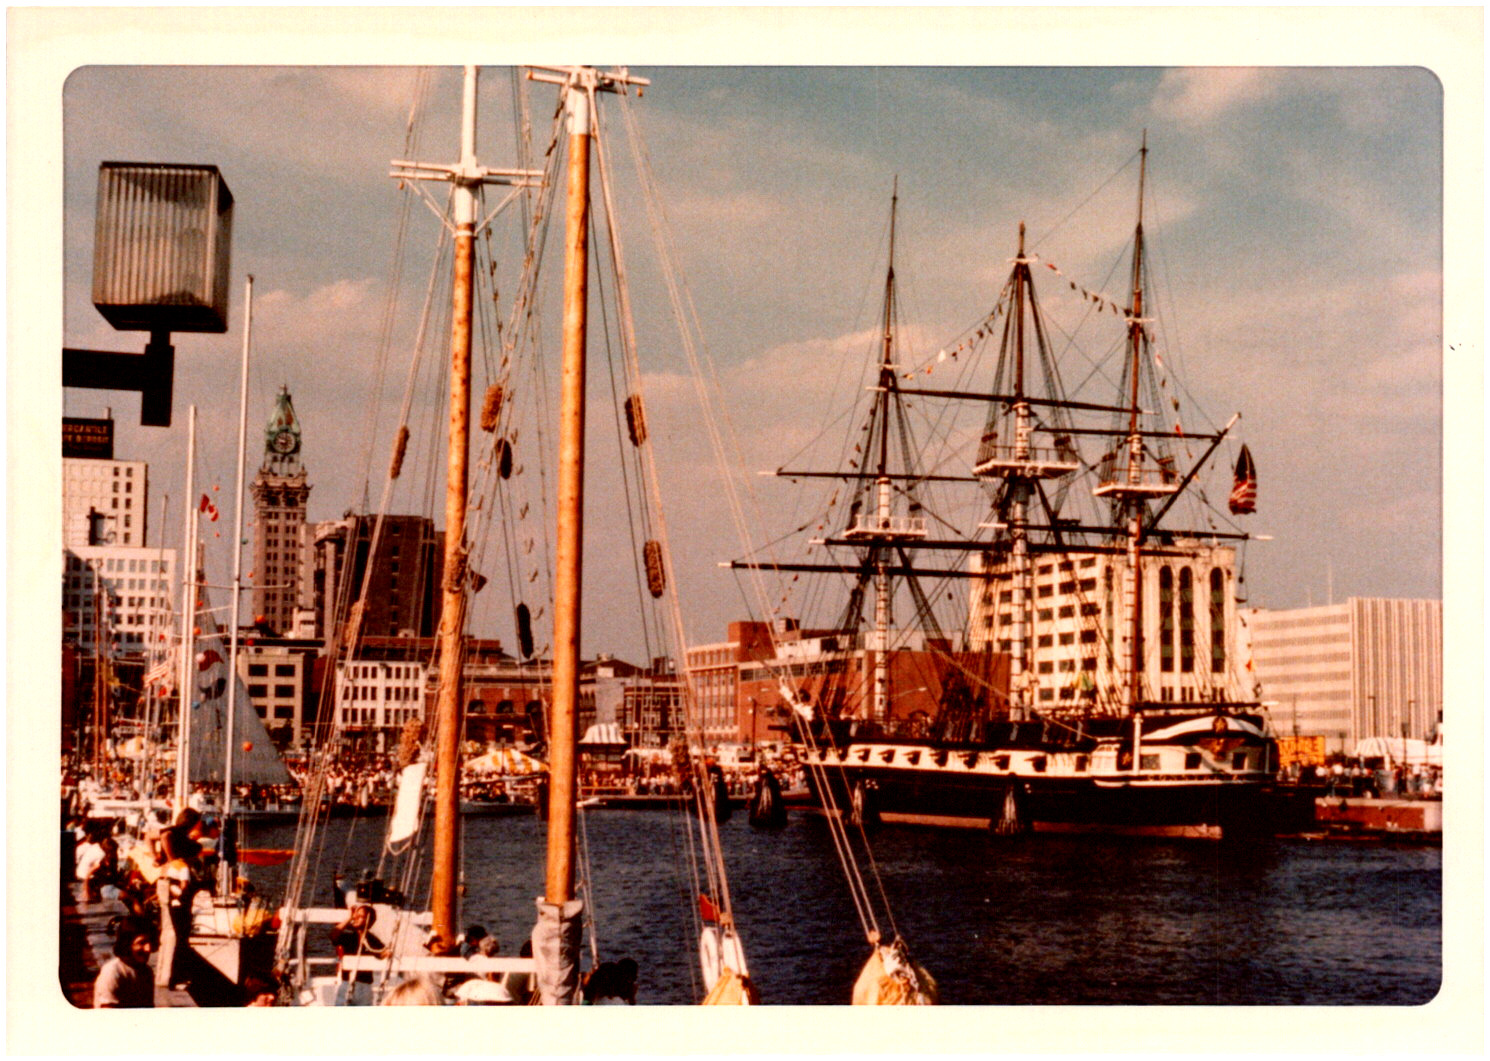 USS Constellation Naval Ship at Inner Harbor Baltimore Maryland 1977 Kodak Photo